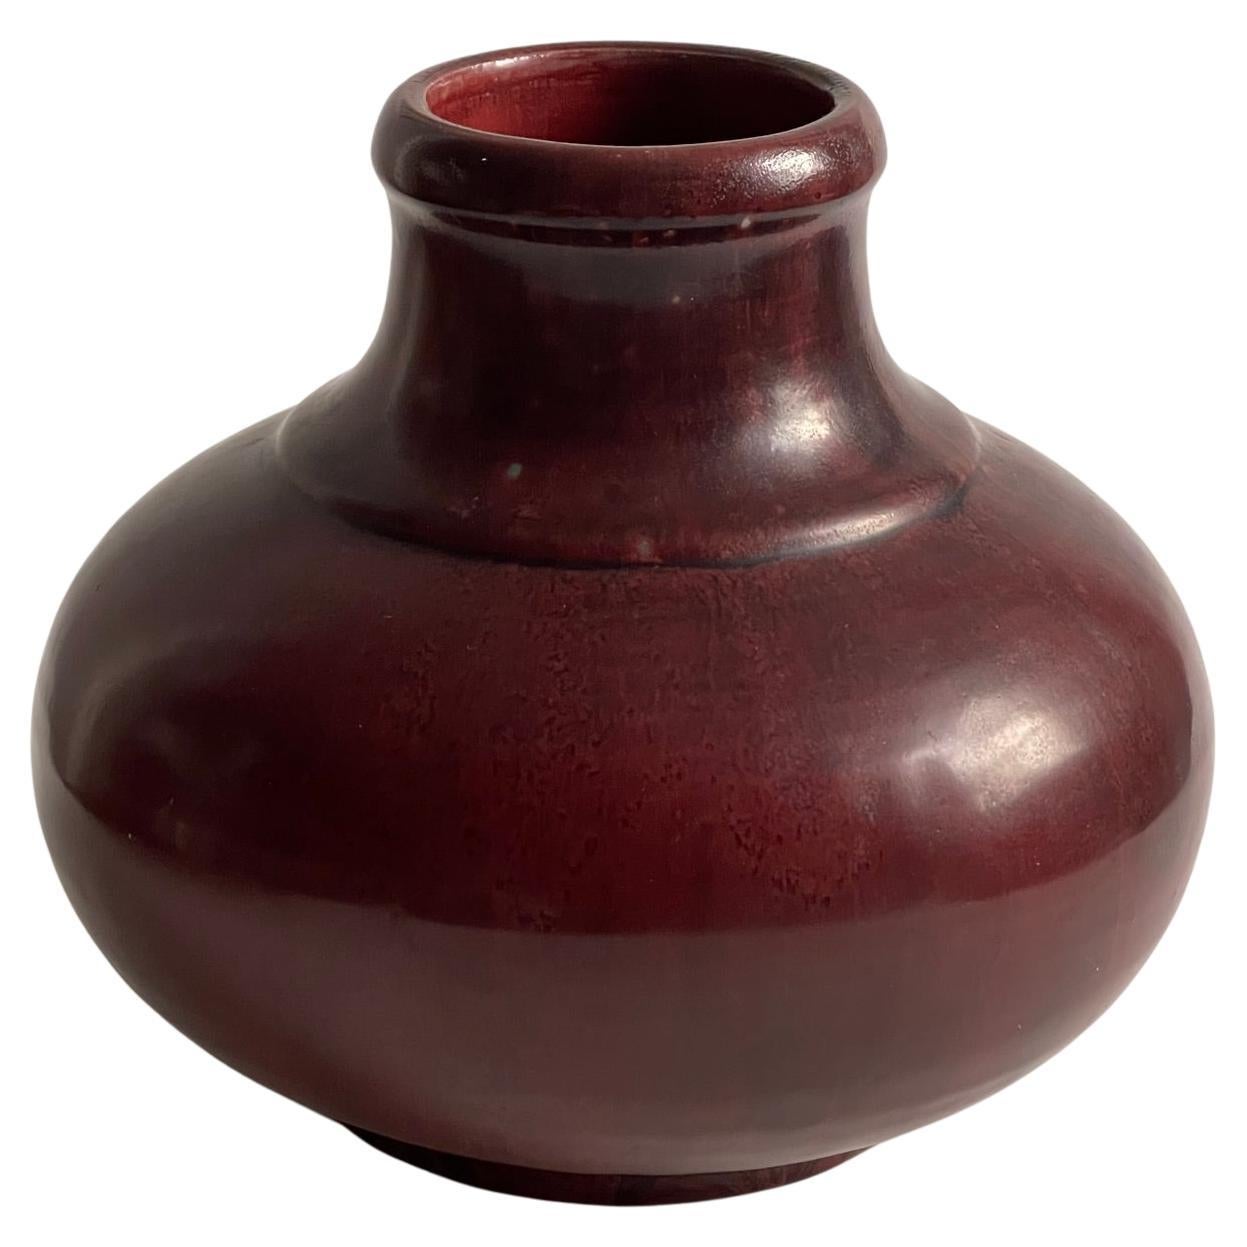 1935 Oxblood Red Vase by Ceramicist Carl Halier for Royal Copenhagen